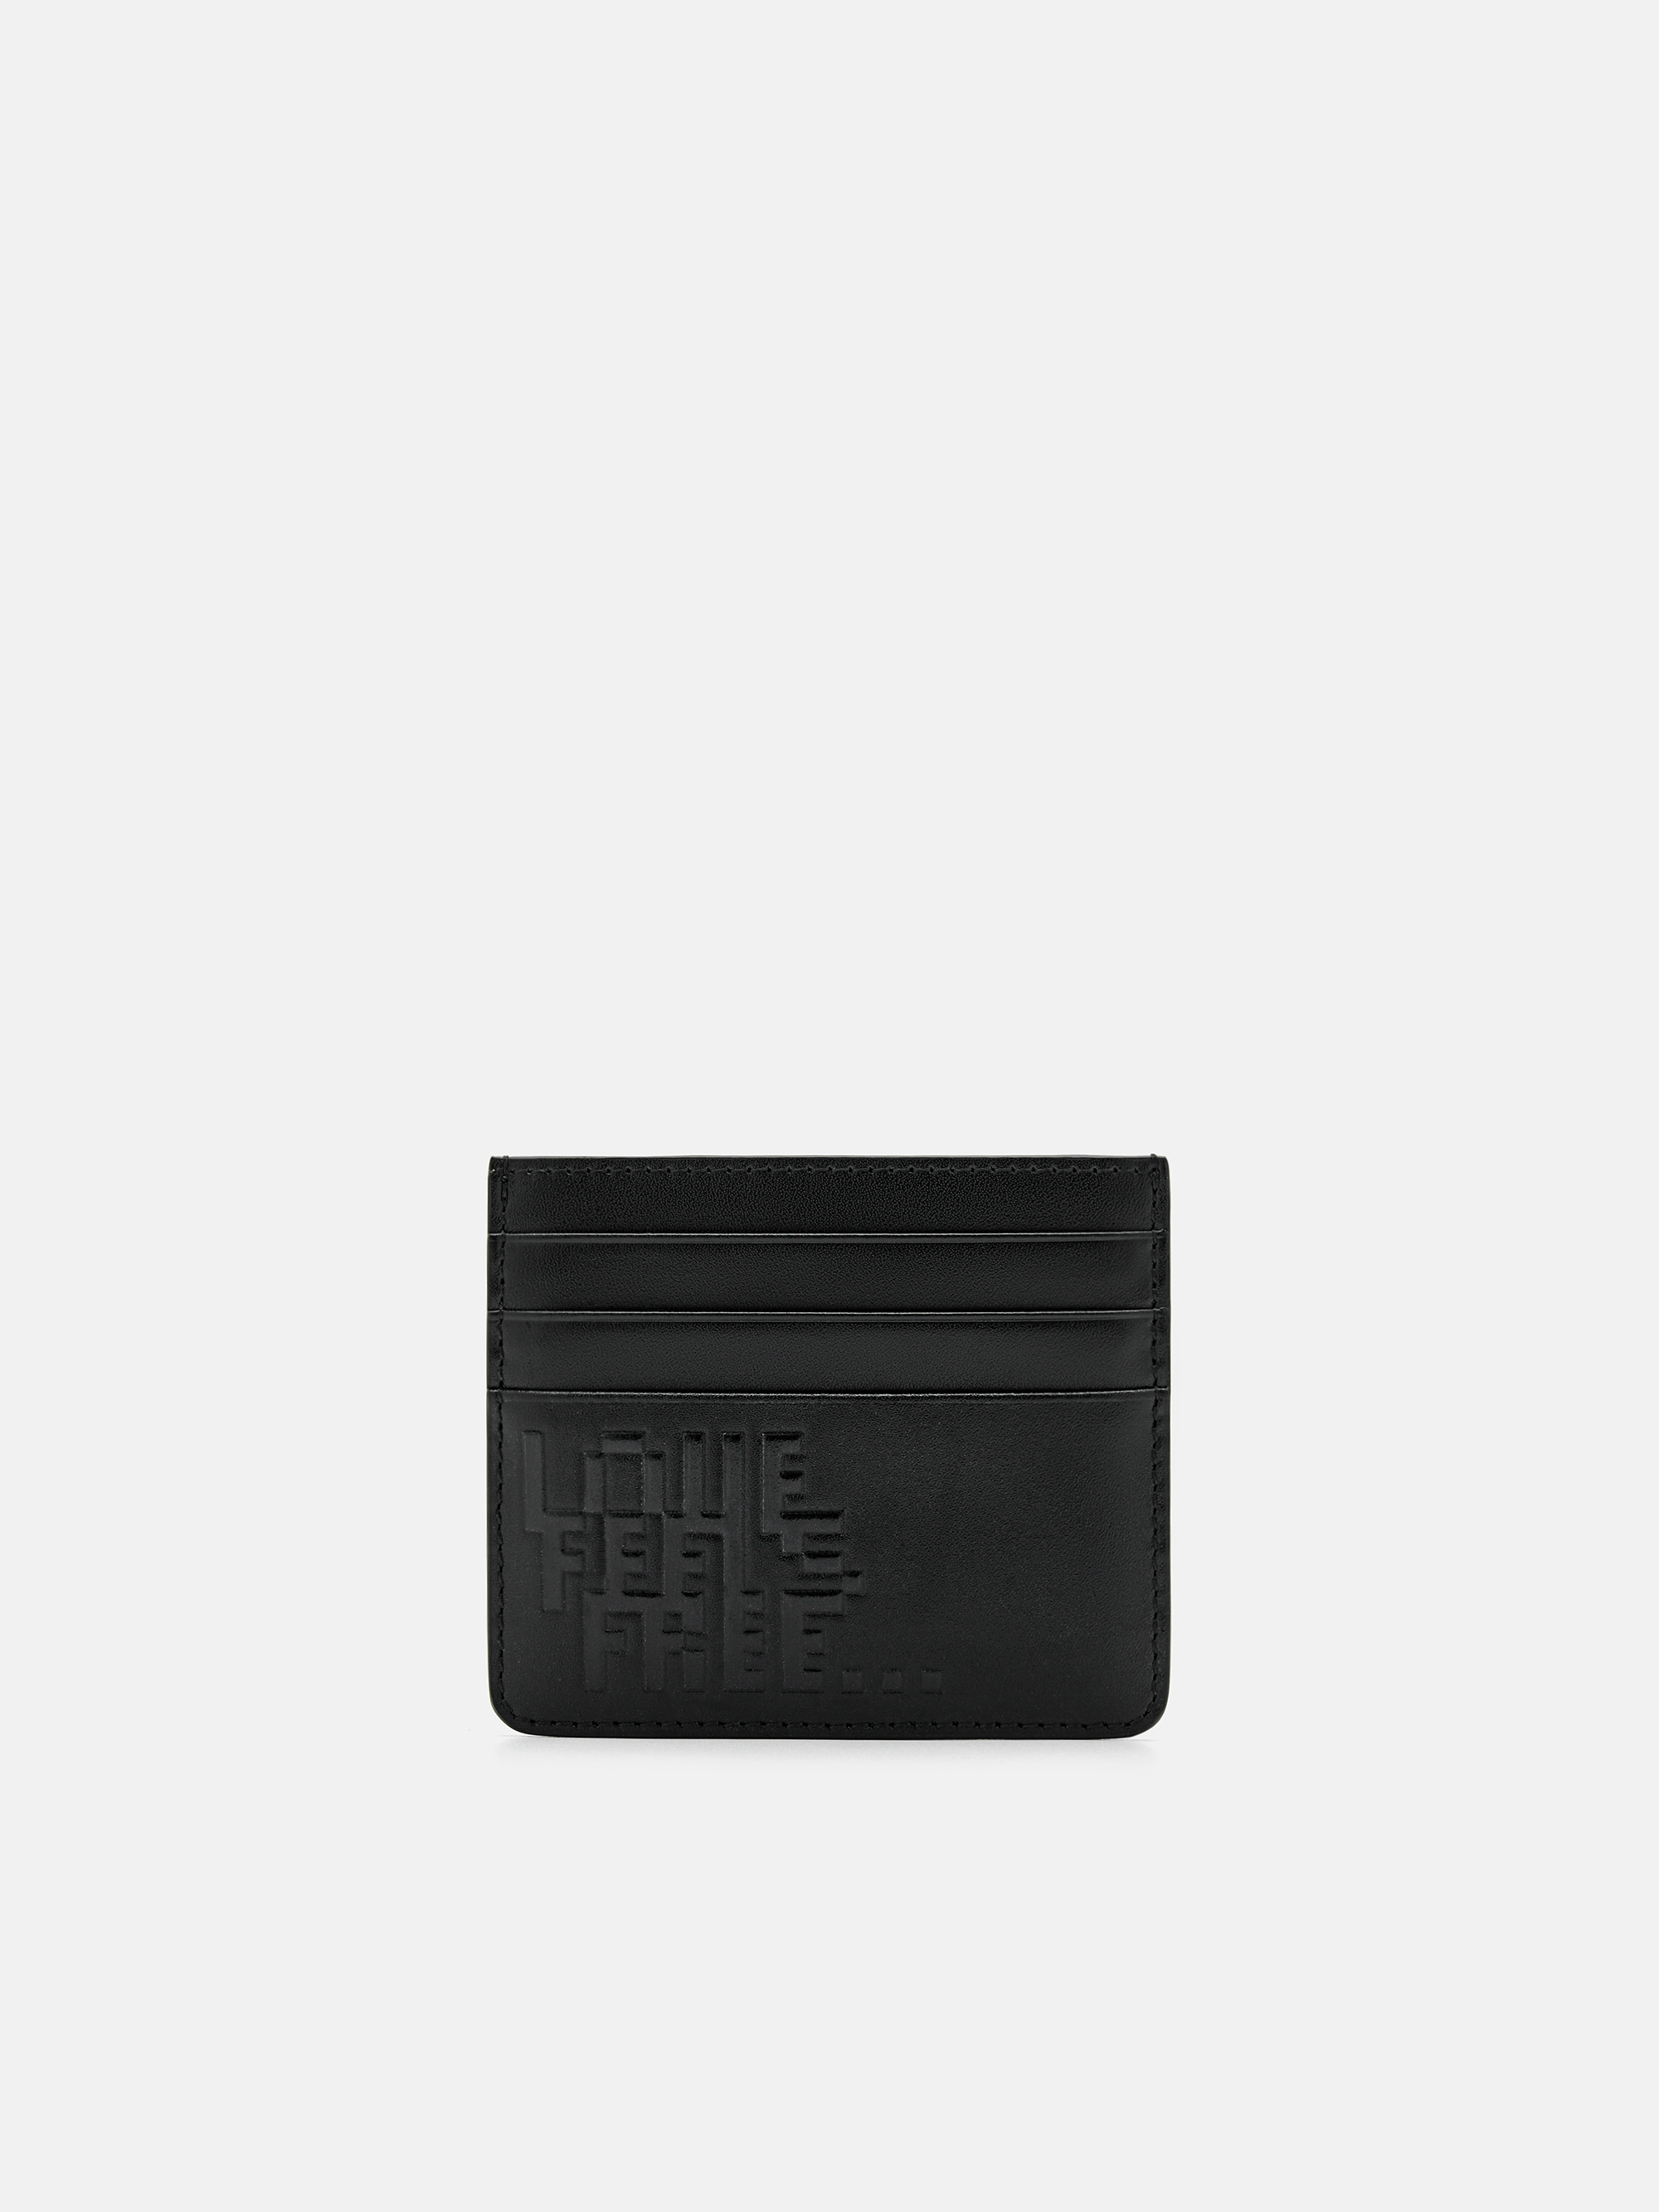 Black Leather Card Holder - PEDRO SG